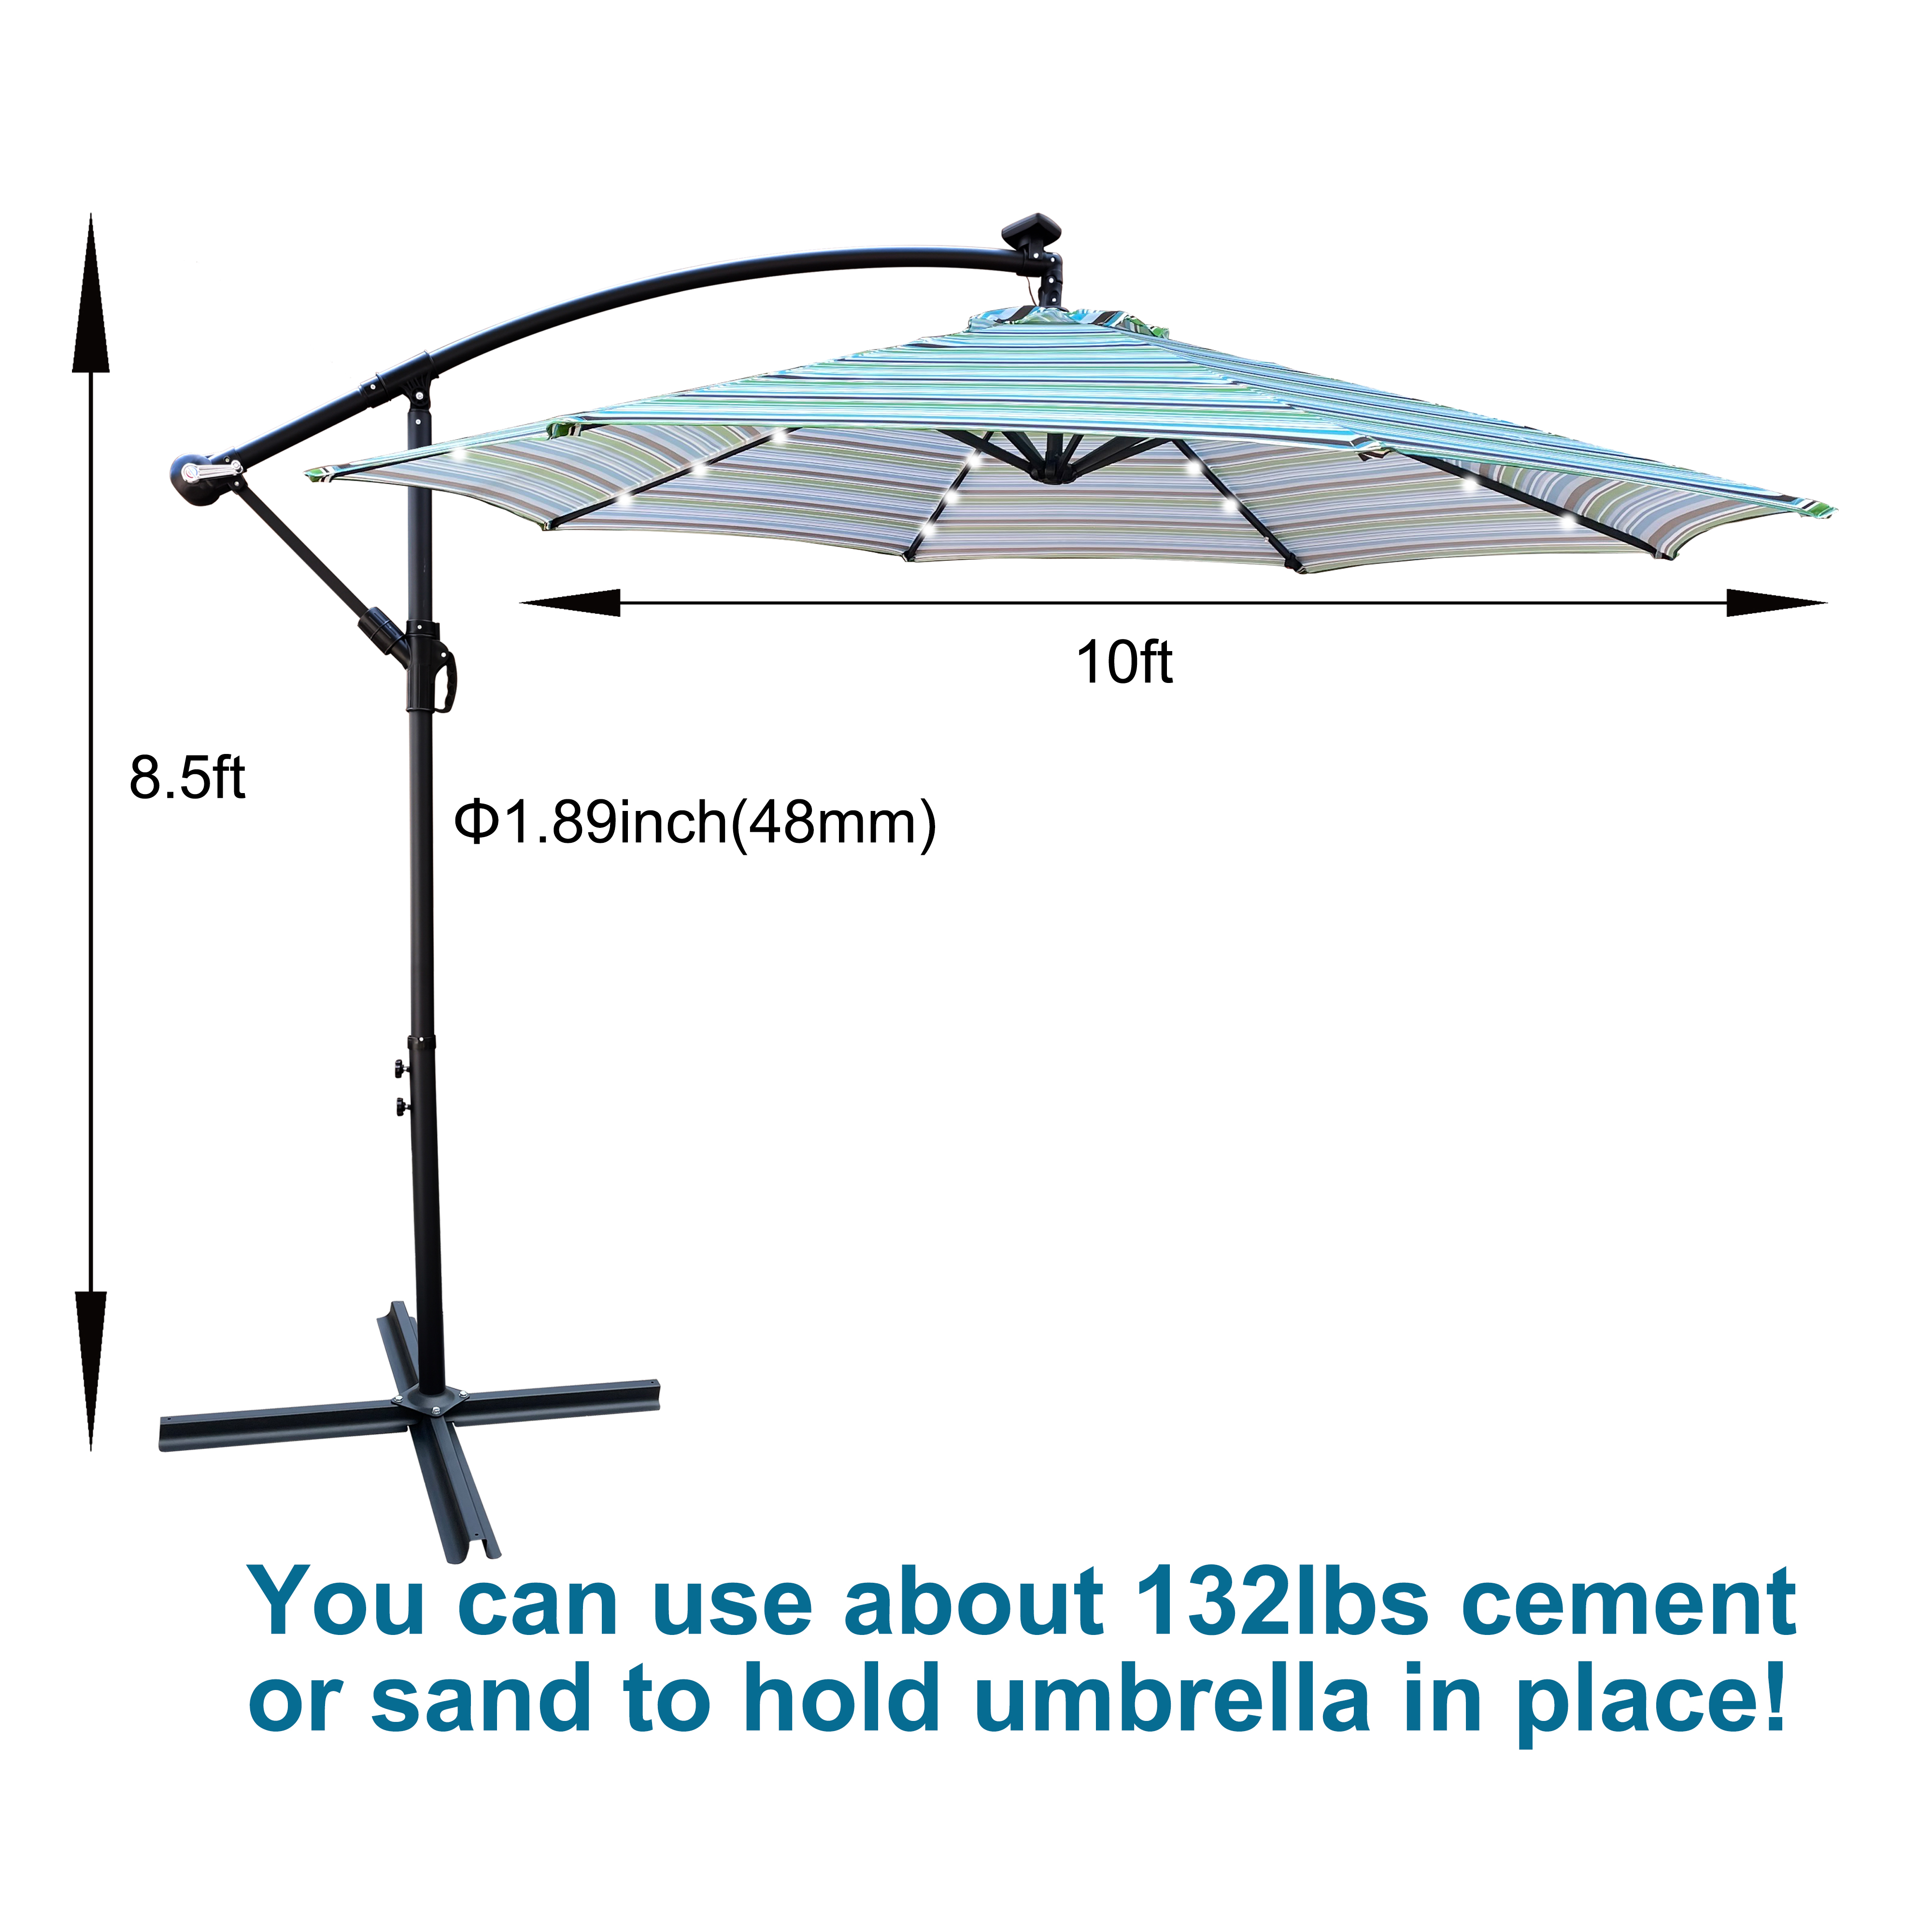 Branax Patio Umbrella, 10 FT Offset Patio Umbrella with Base Included, Outdoor Patio Umbrella with Solar Lights, Crank, Push Button Tilt, Large Patio Umbrella for Garden (Blue Striped) - image 5 of 7